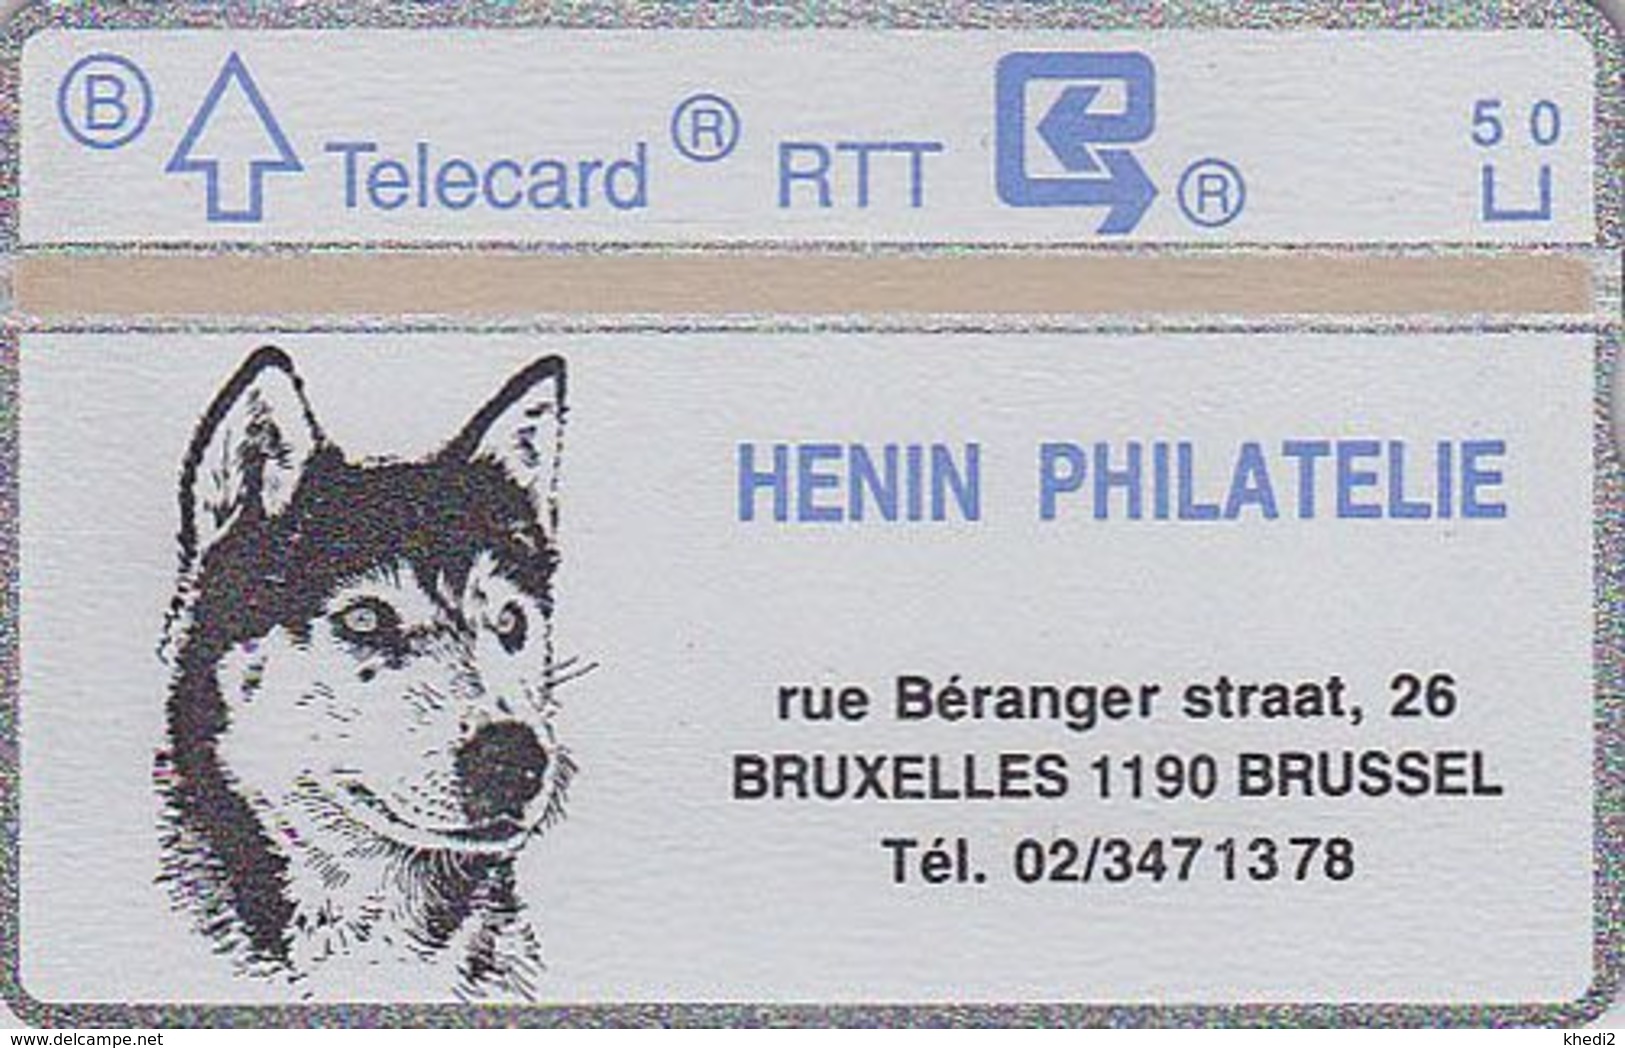 Télécarte Privée De Belgique LG L&G NEUVE - ANIMAL - CHIEN HUSKY  - DOG MINT Phonecard - HUND Telefonkarte - 588 - Without Chip